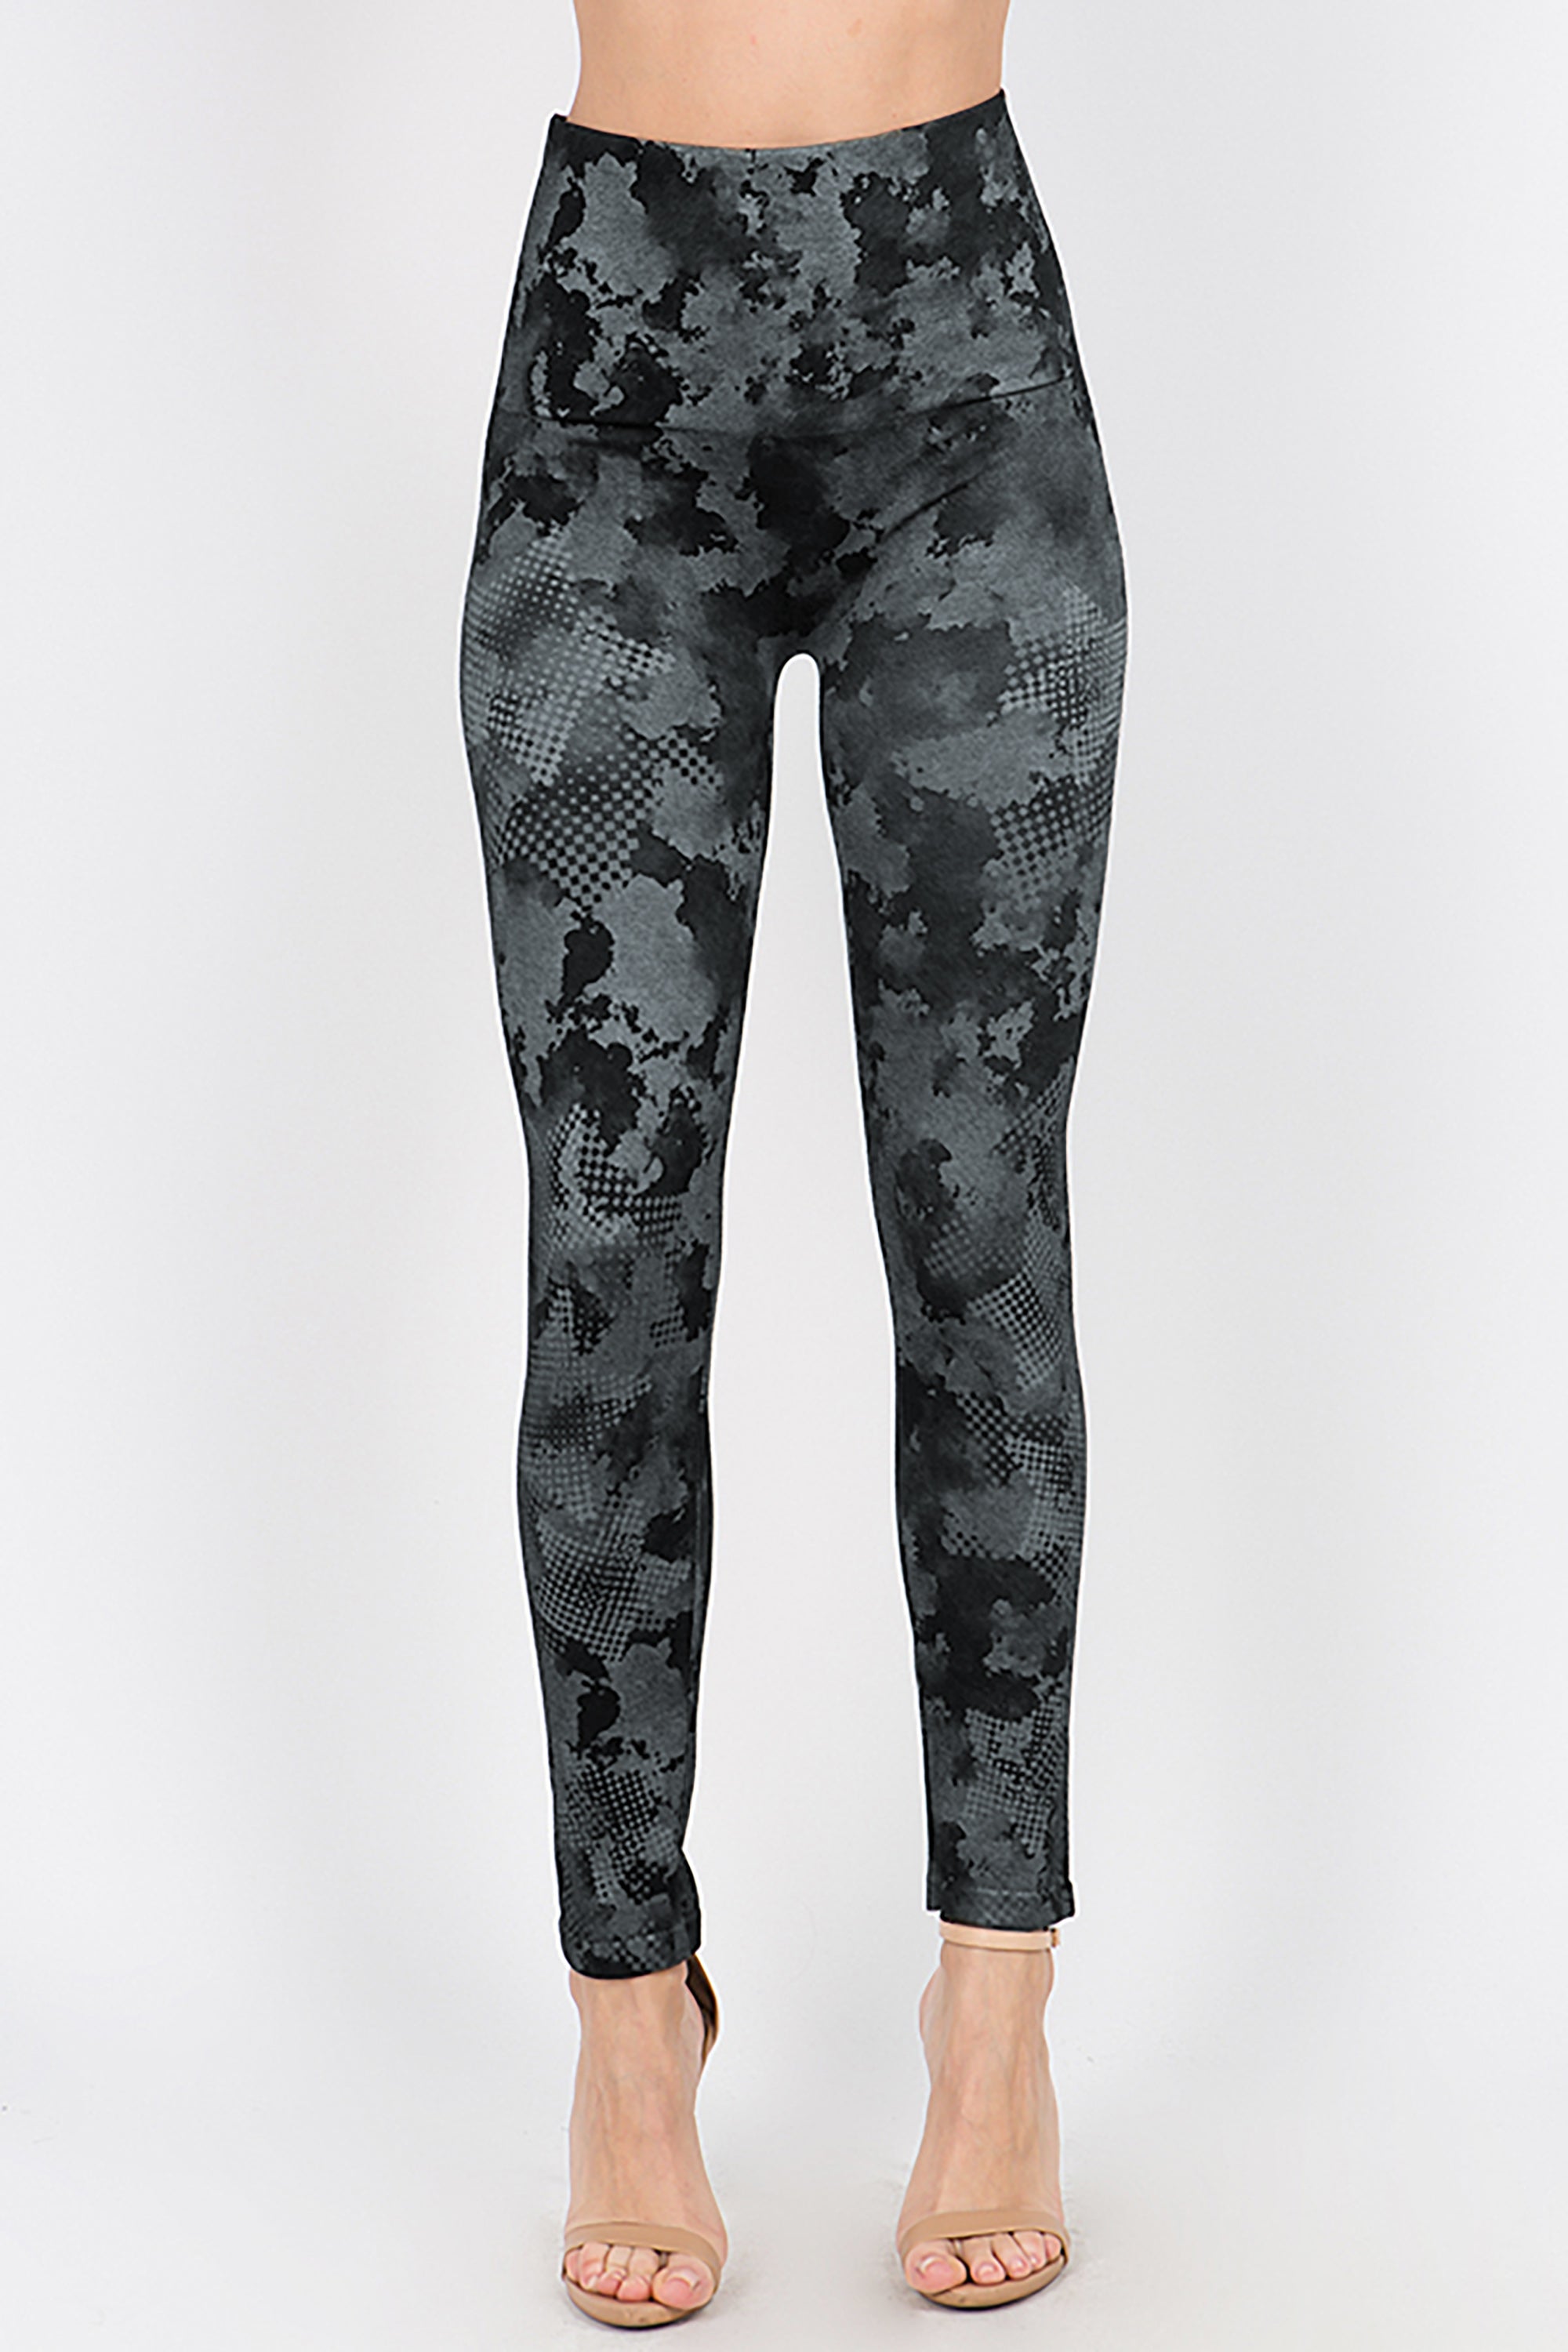 Nina Parker Plus Size Camouflage Leggings Women's 0X Camo Print Elastic  Waist~ | eBay